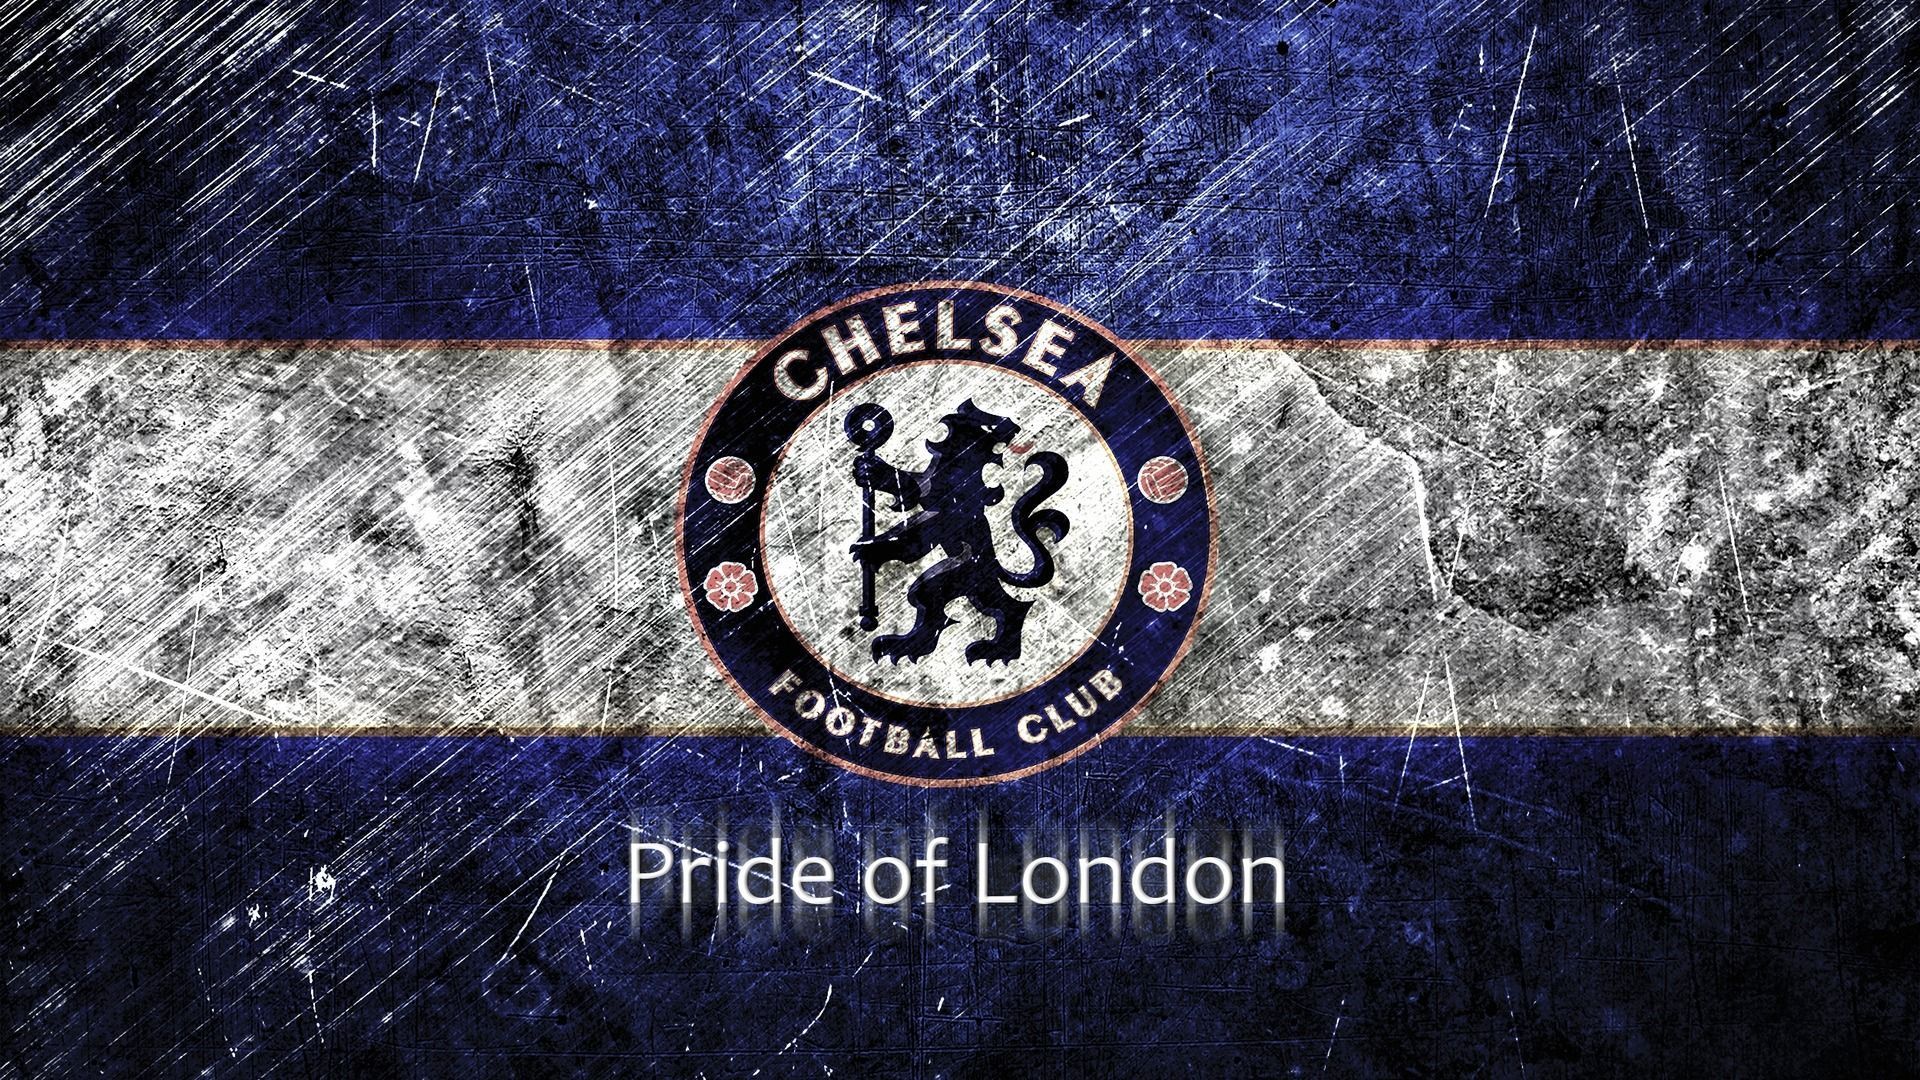 Chelsea Football Club : Desktop and mobile wallpaper : Wallippo